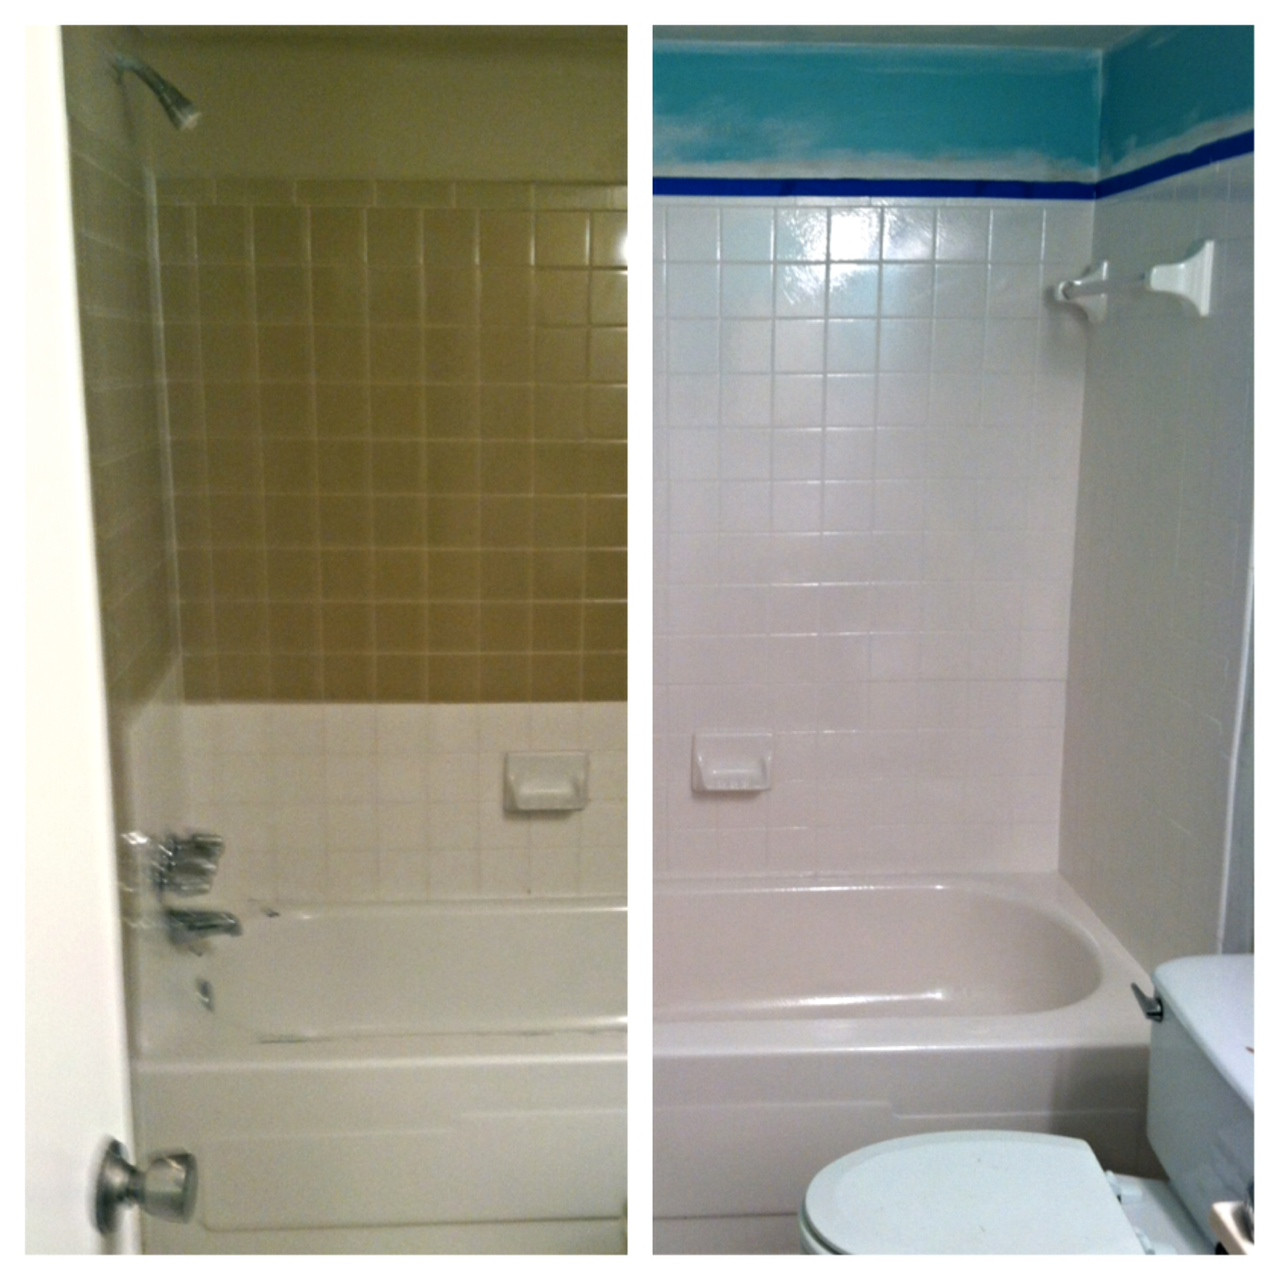 Refinishing Bathroom Tiles
 The Cabindo DIY Tub and Tile Reglazing